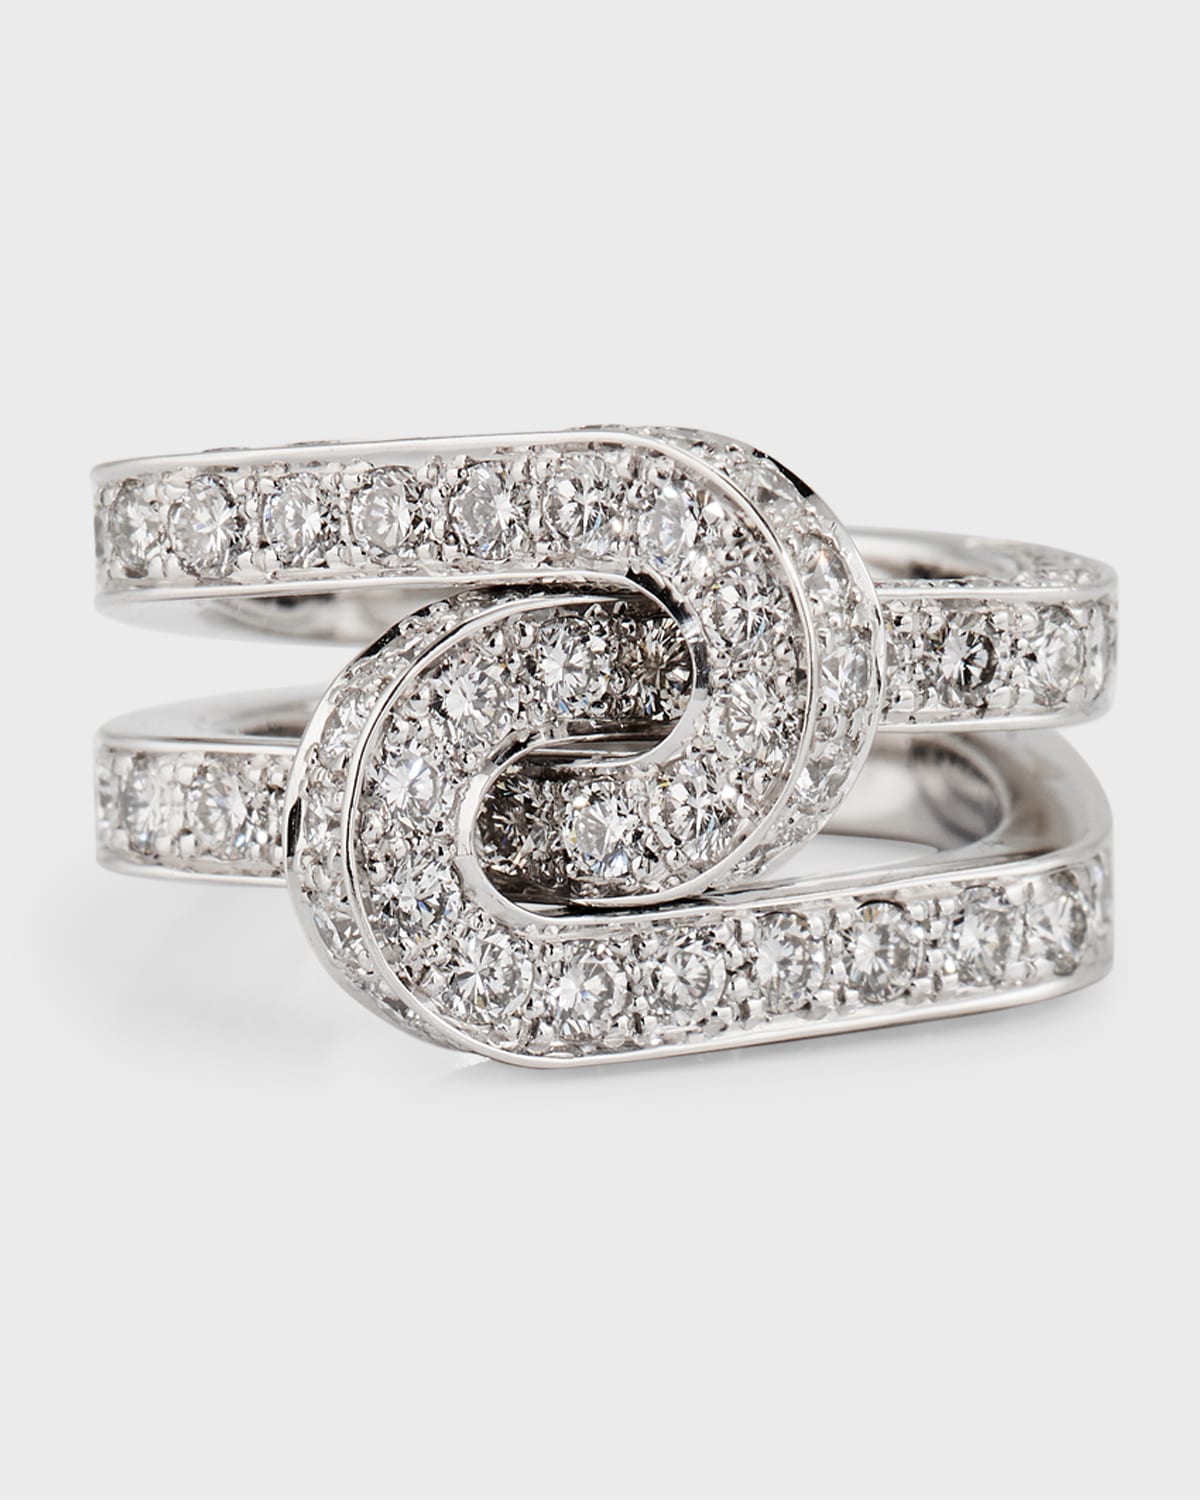 Maillon Star 18K White Gold Diamond Ring, Size 7 (54)